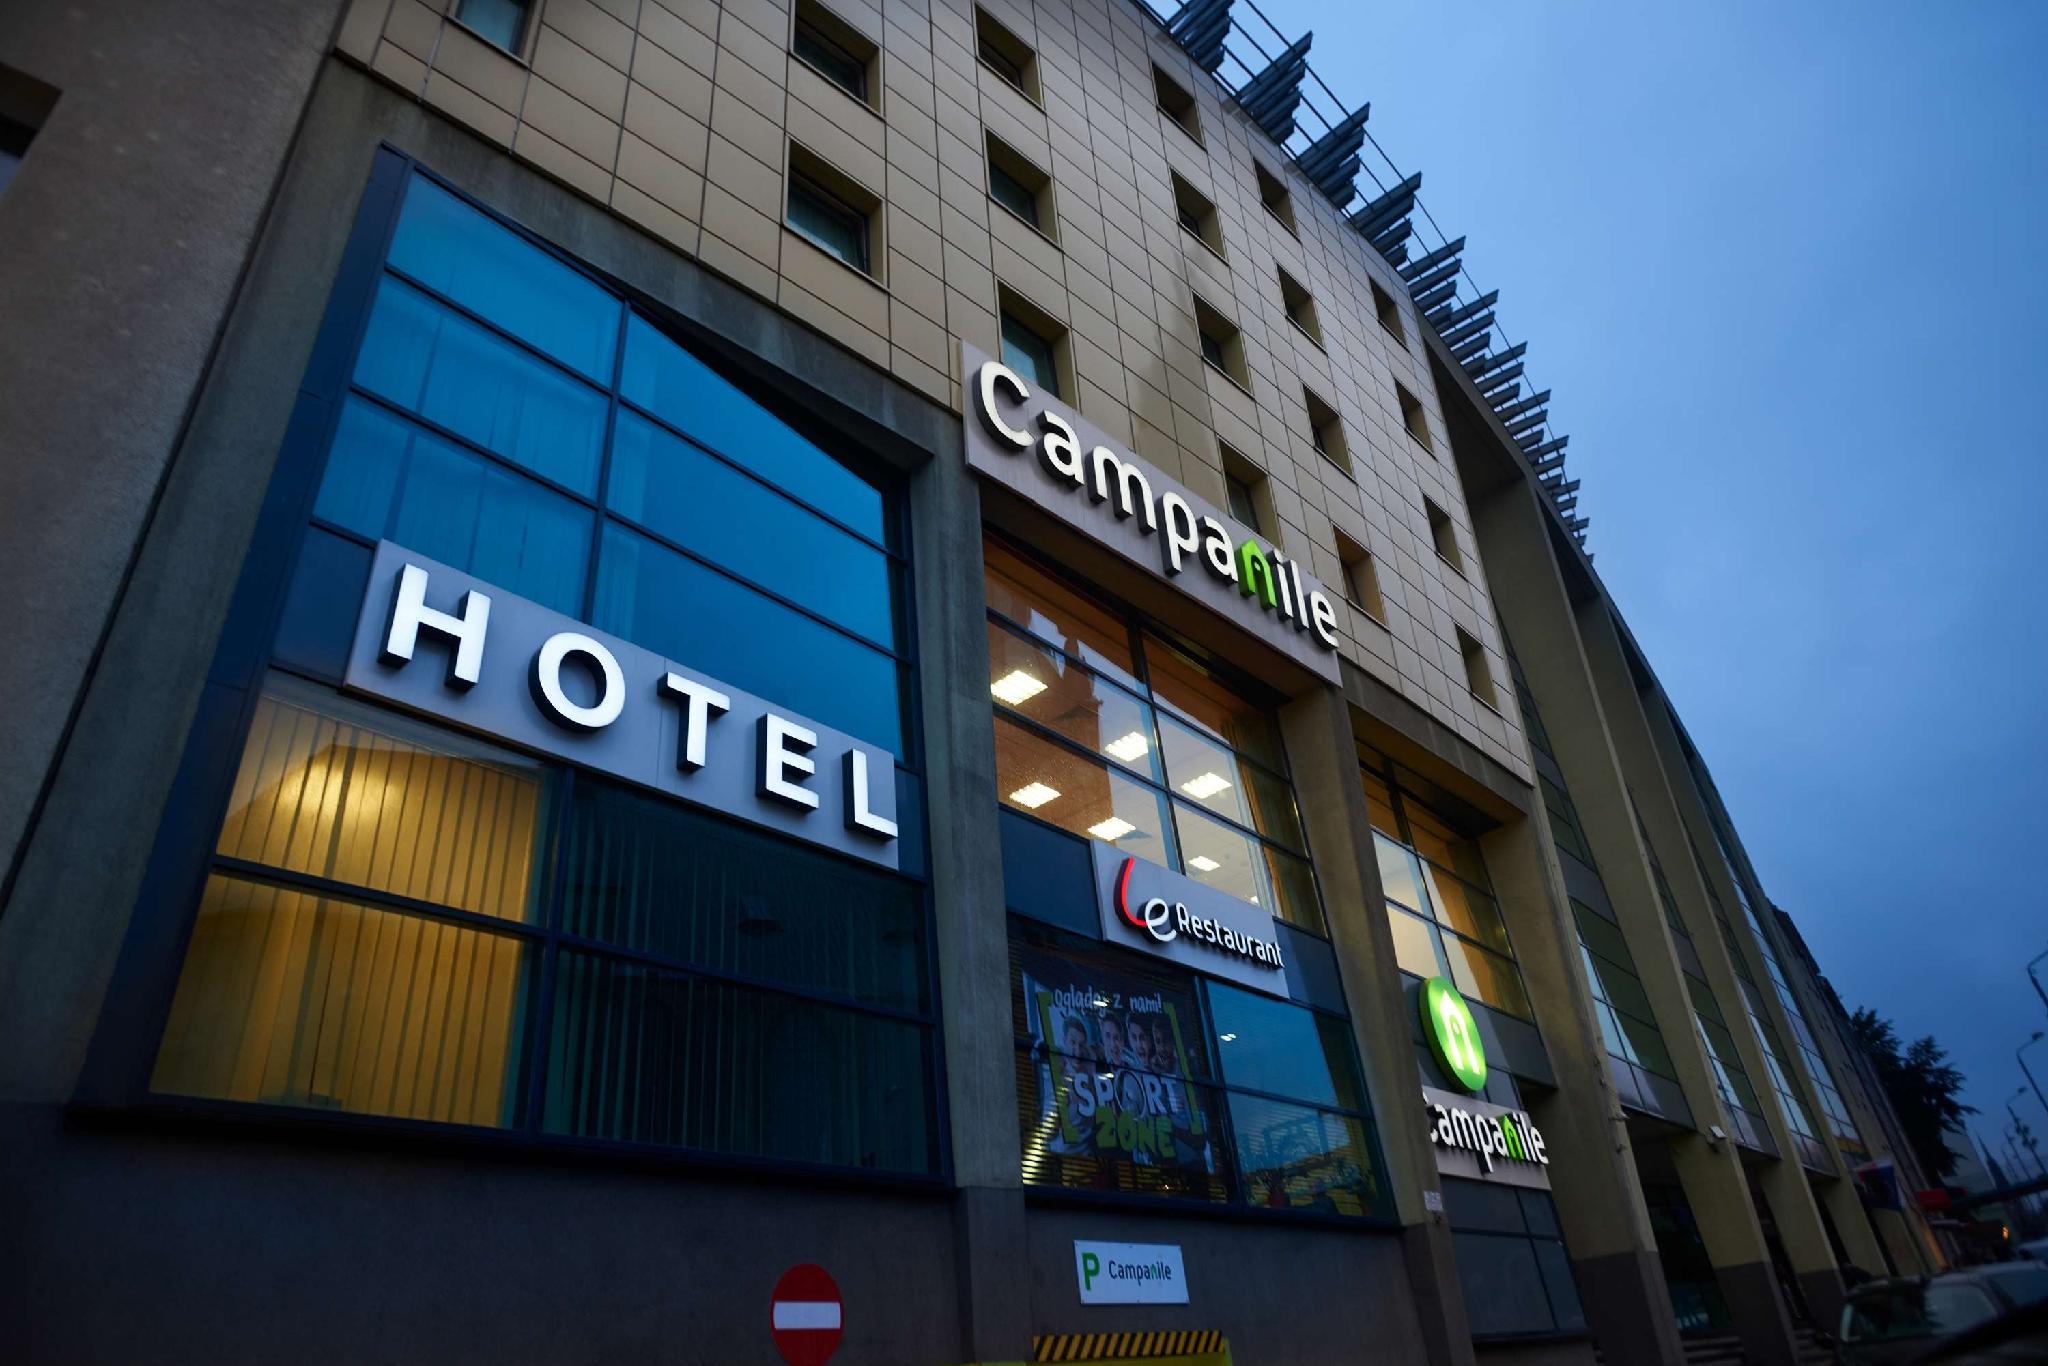 Campanile Hotel Szczecin image 1